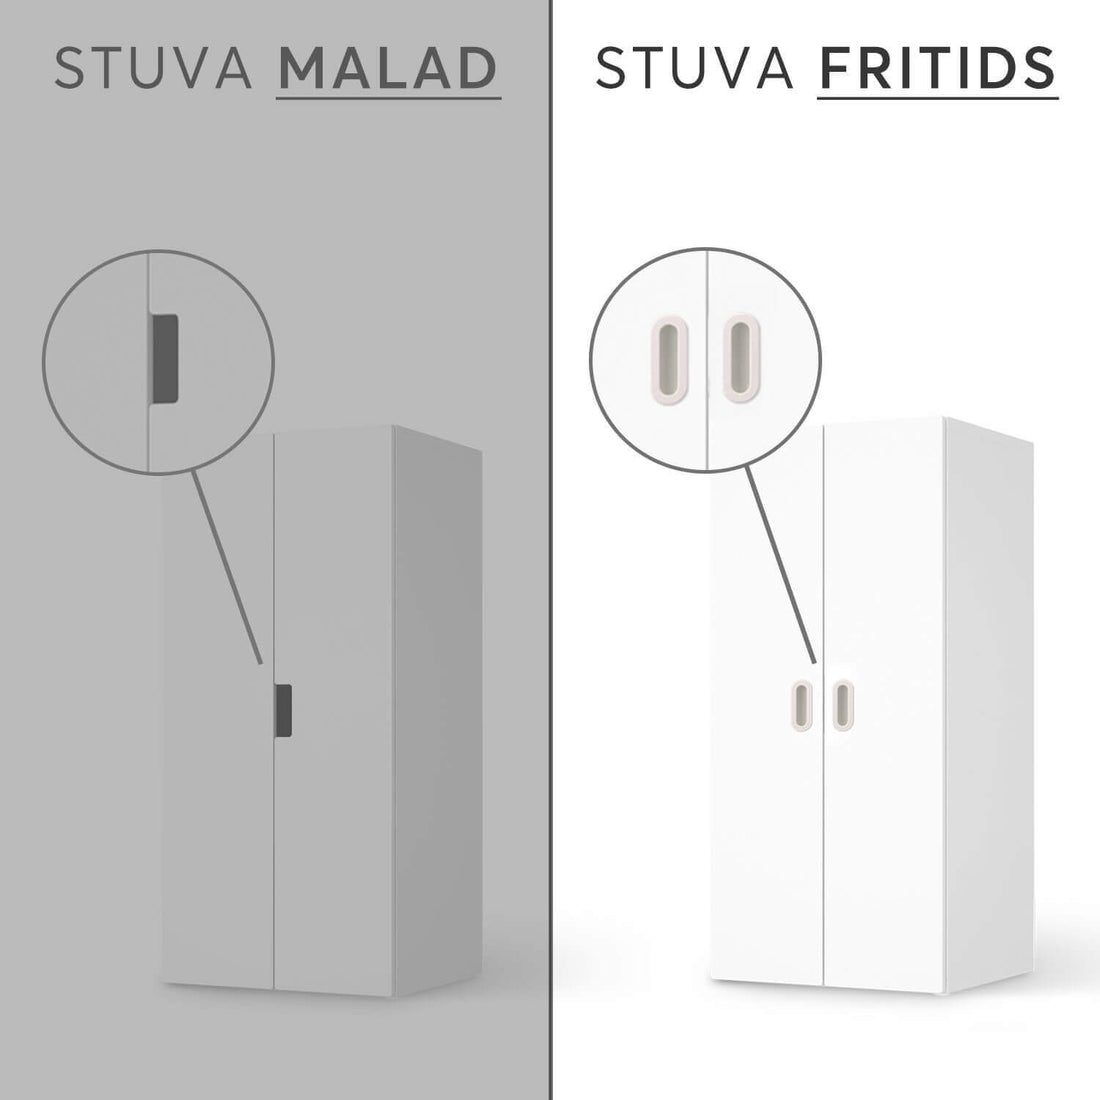 Vergleich IKEA Stuva Fritids / Malad - Elephants